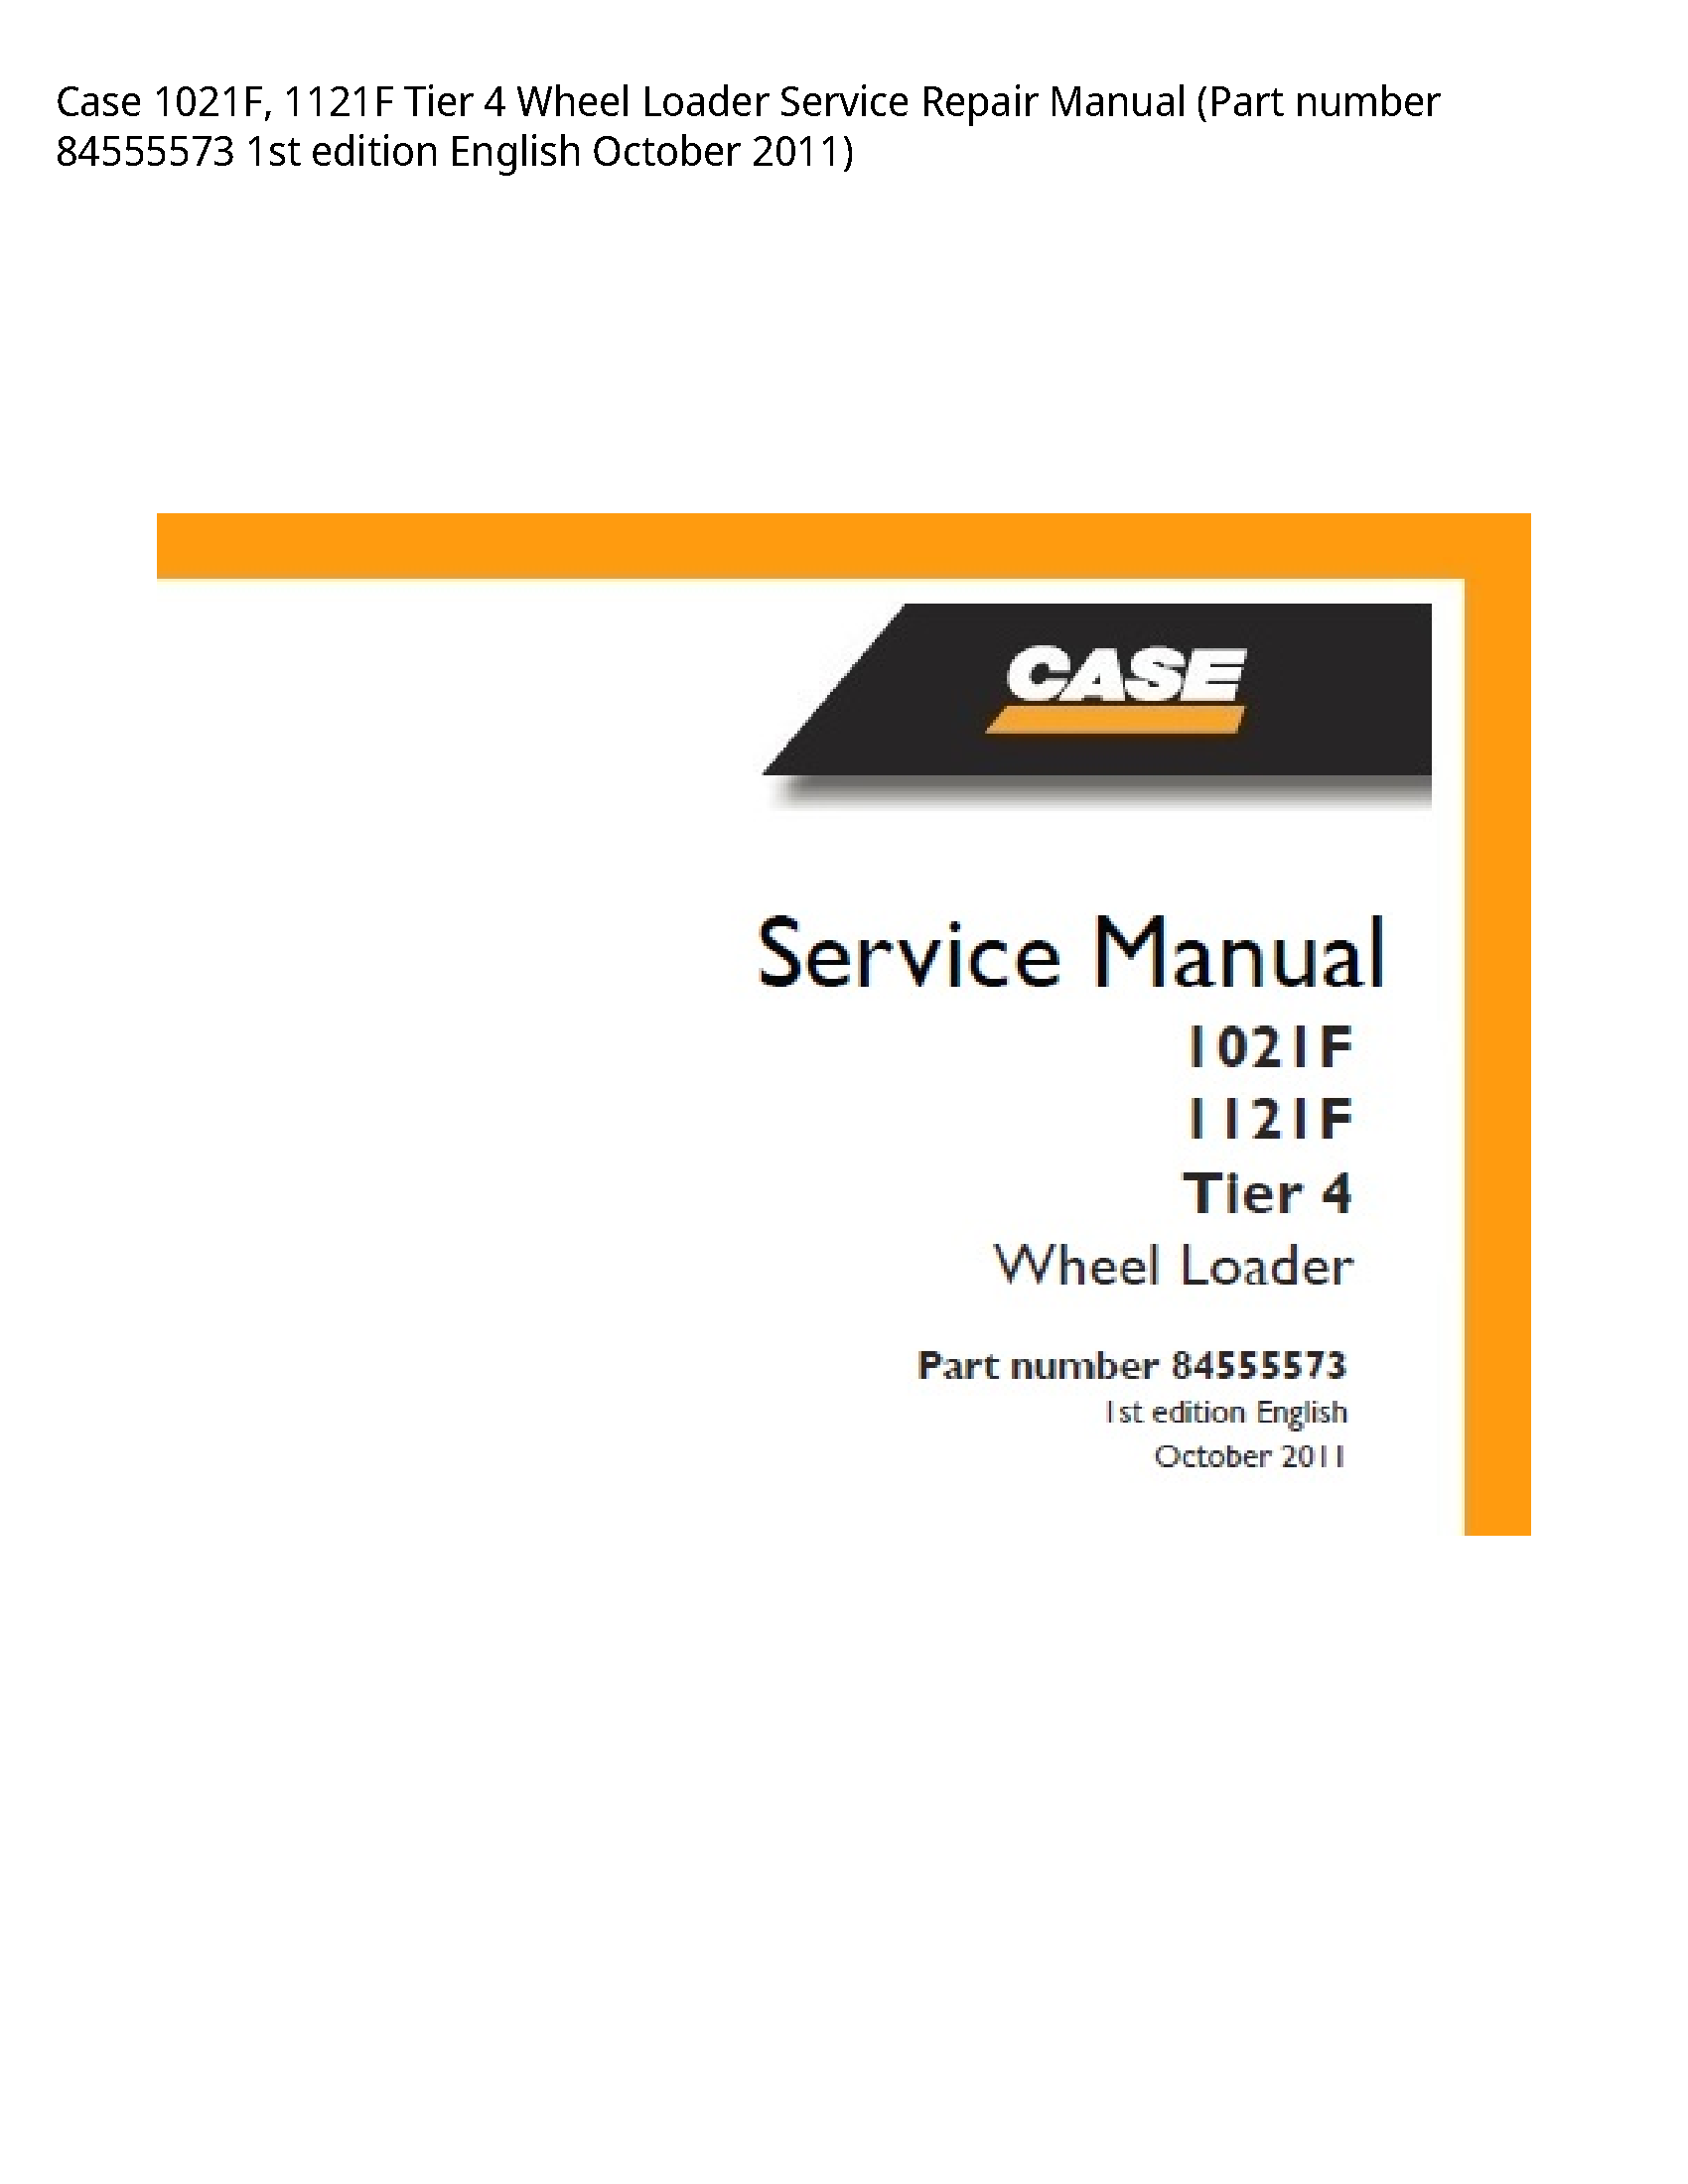 Case/Case IH 1021F Tier Wheel Loader manual